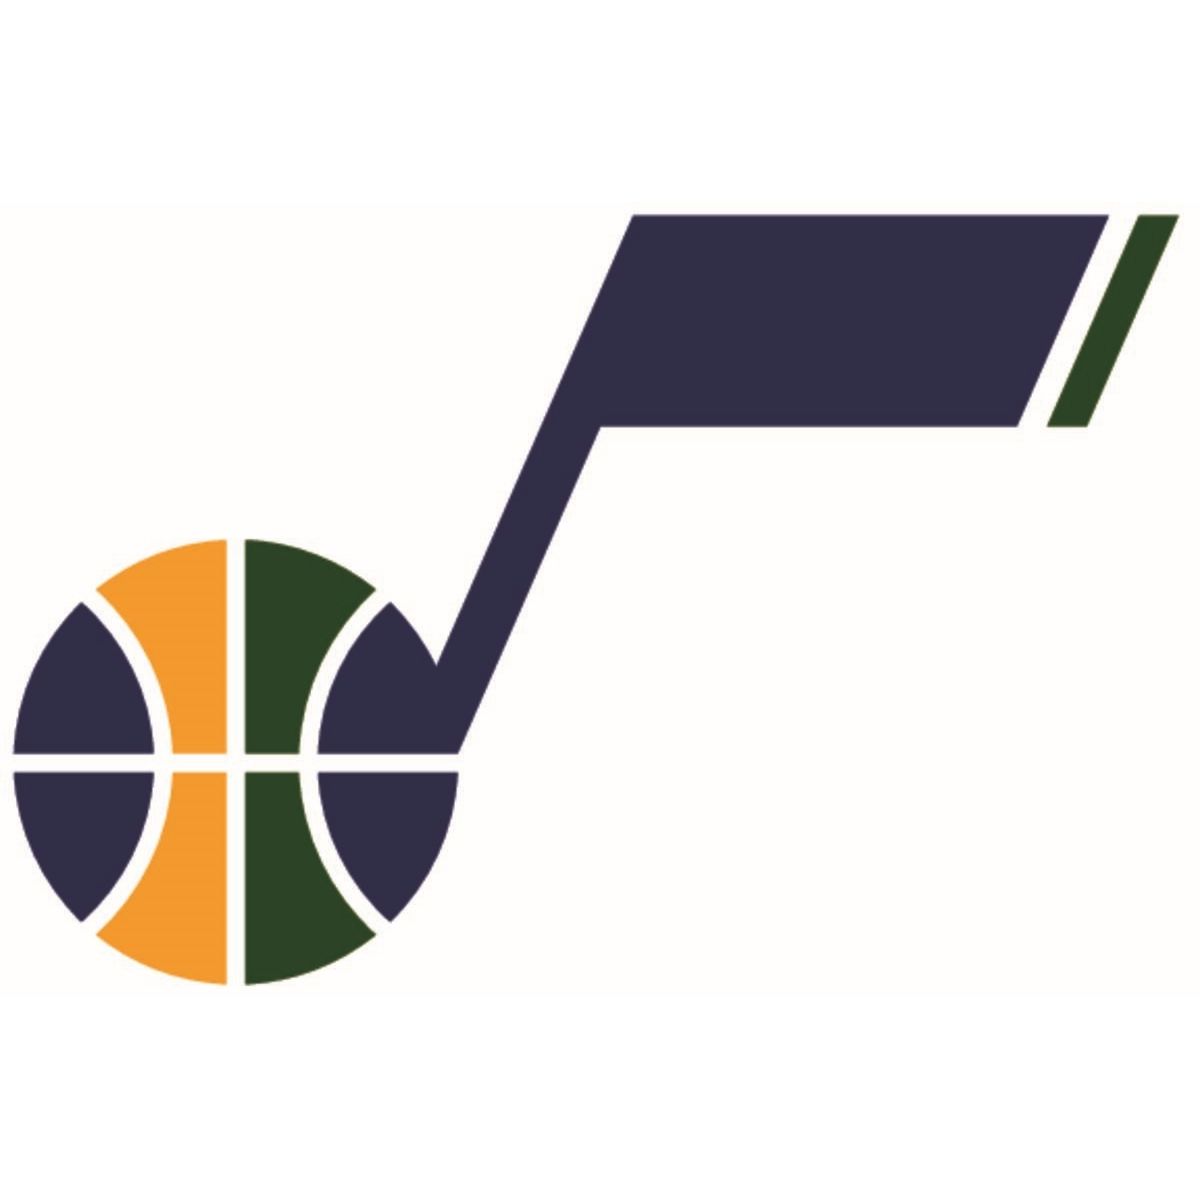 Ballons de basket NBA Team Tribute Utah Jazz 22